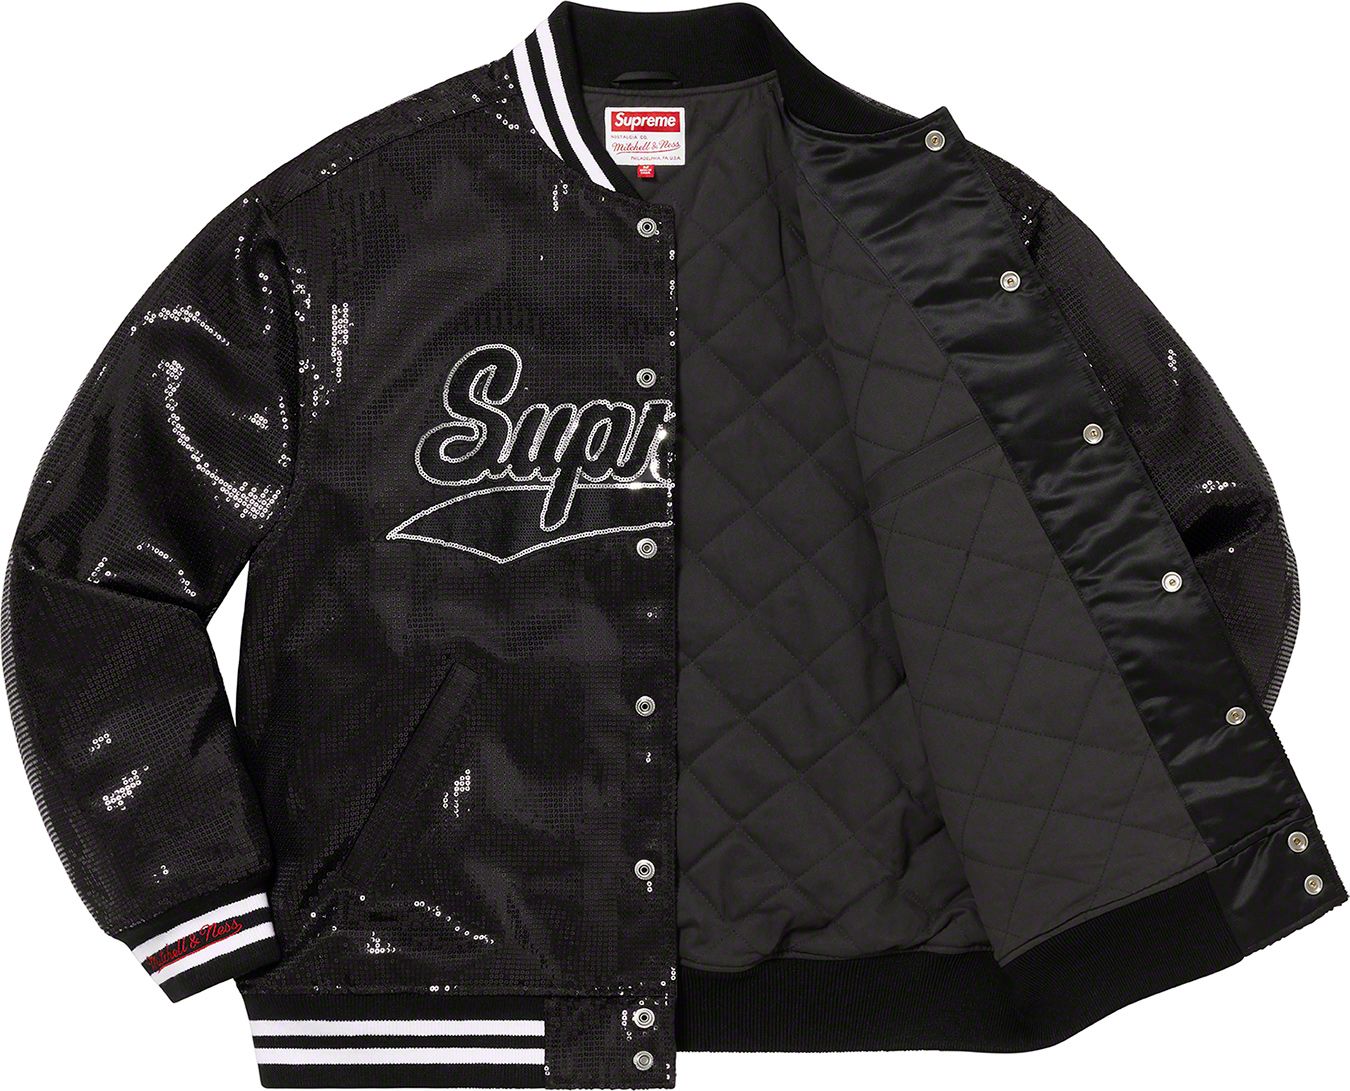 Supreme®/Mitchell & Ness® Sequin Varsity Jacket - Spring/Summer 